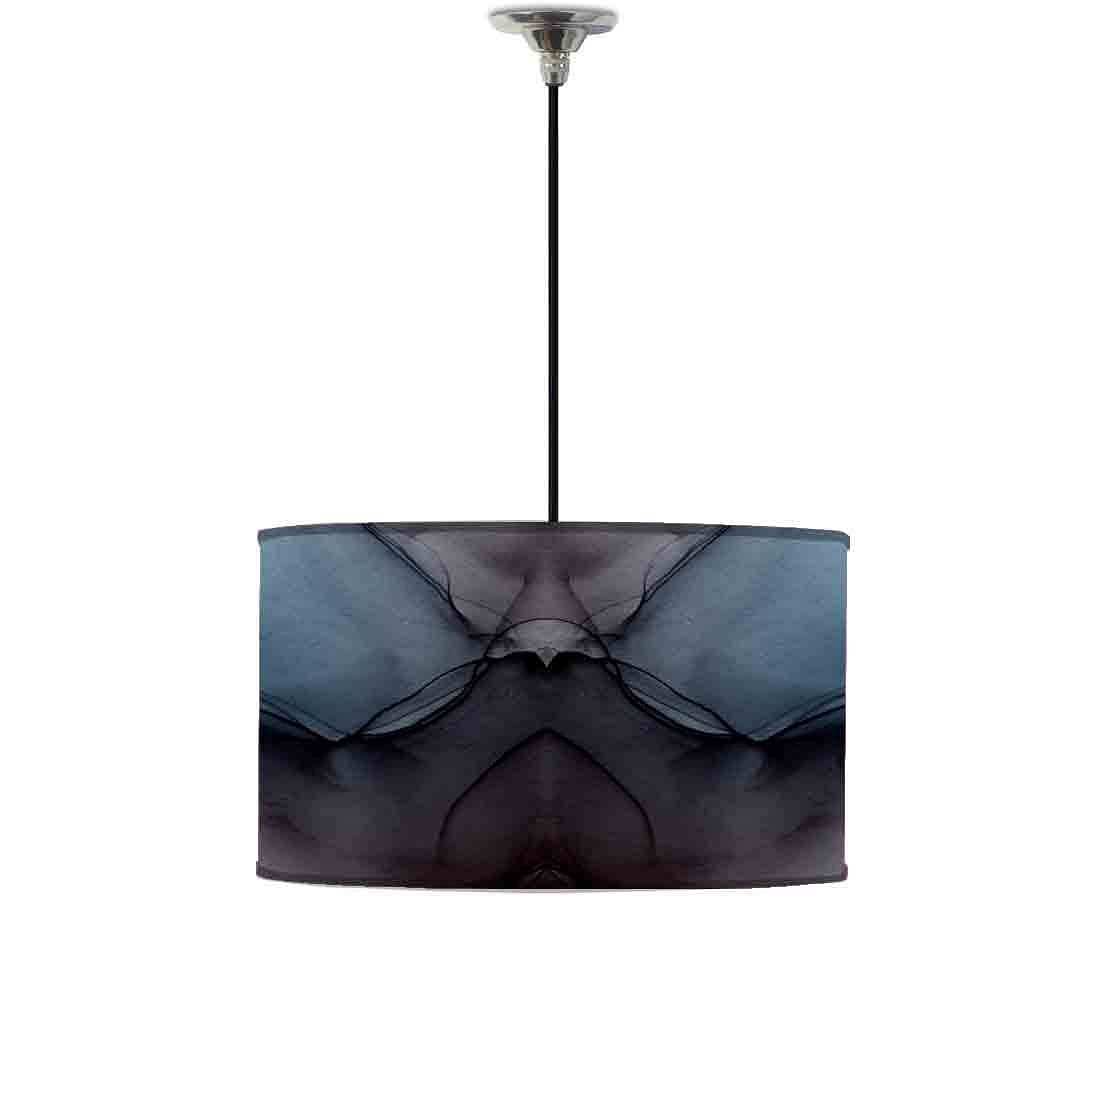 Ceiling Lamp Hanging Drum Lampshade - Black Blue Ink Watercolor Nutcase